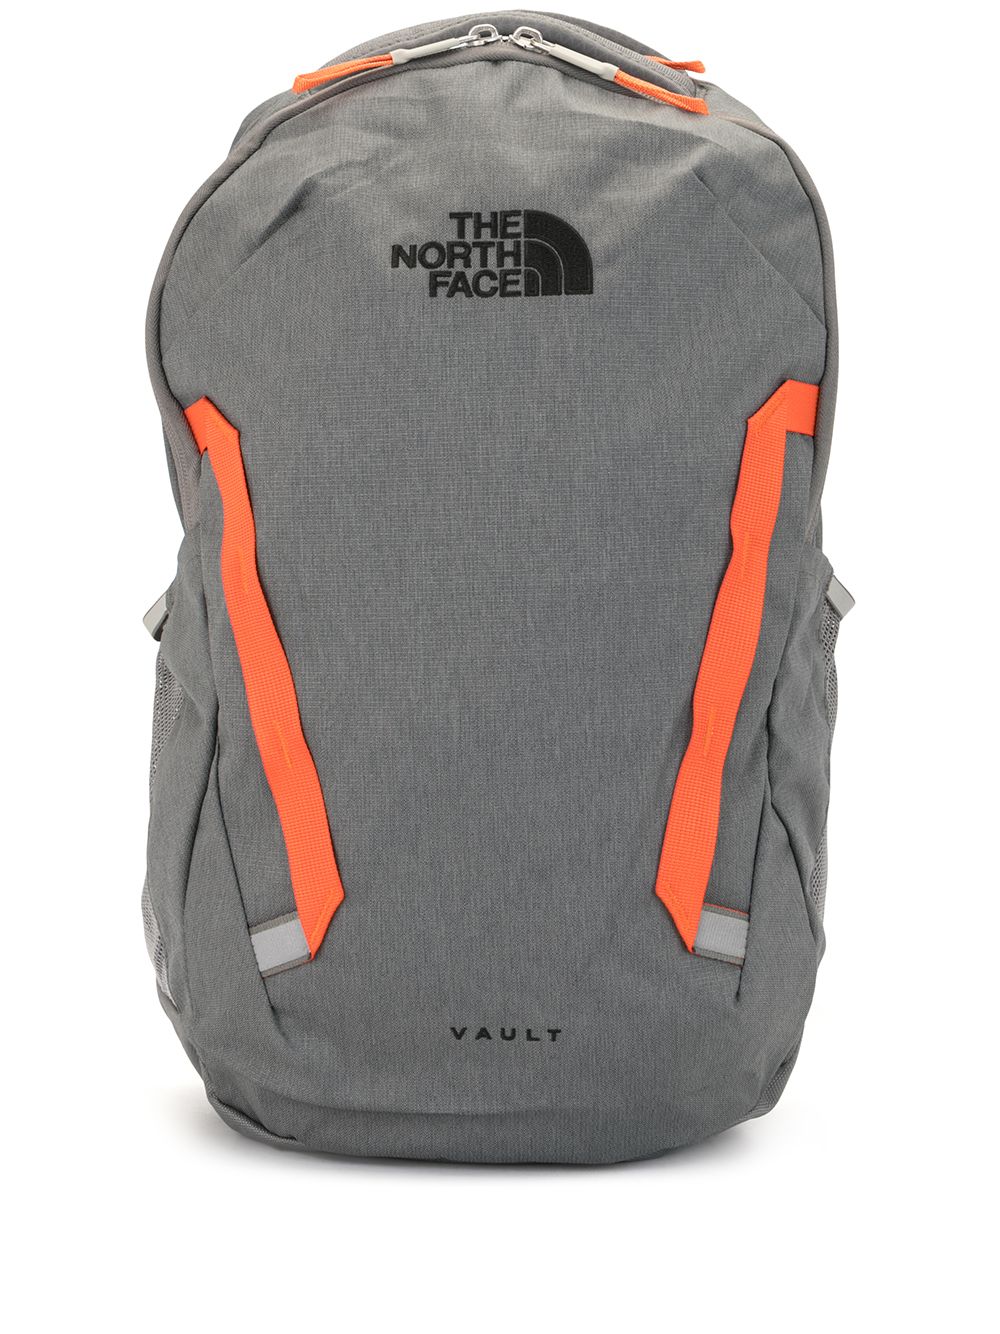 фото The north face рюкзак с вышитым логотипом